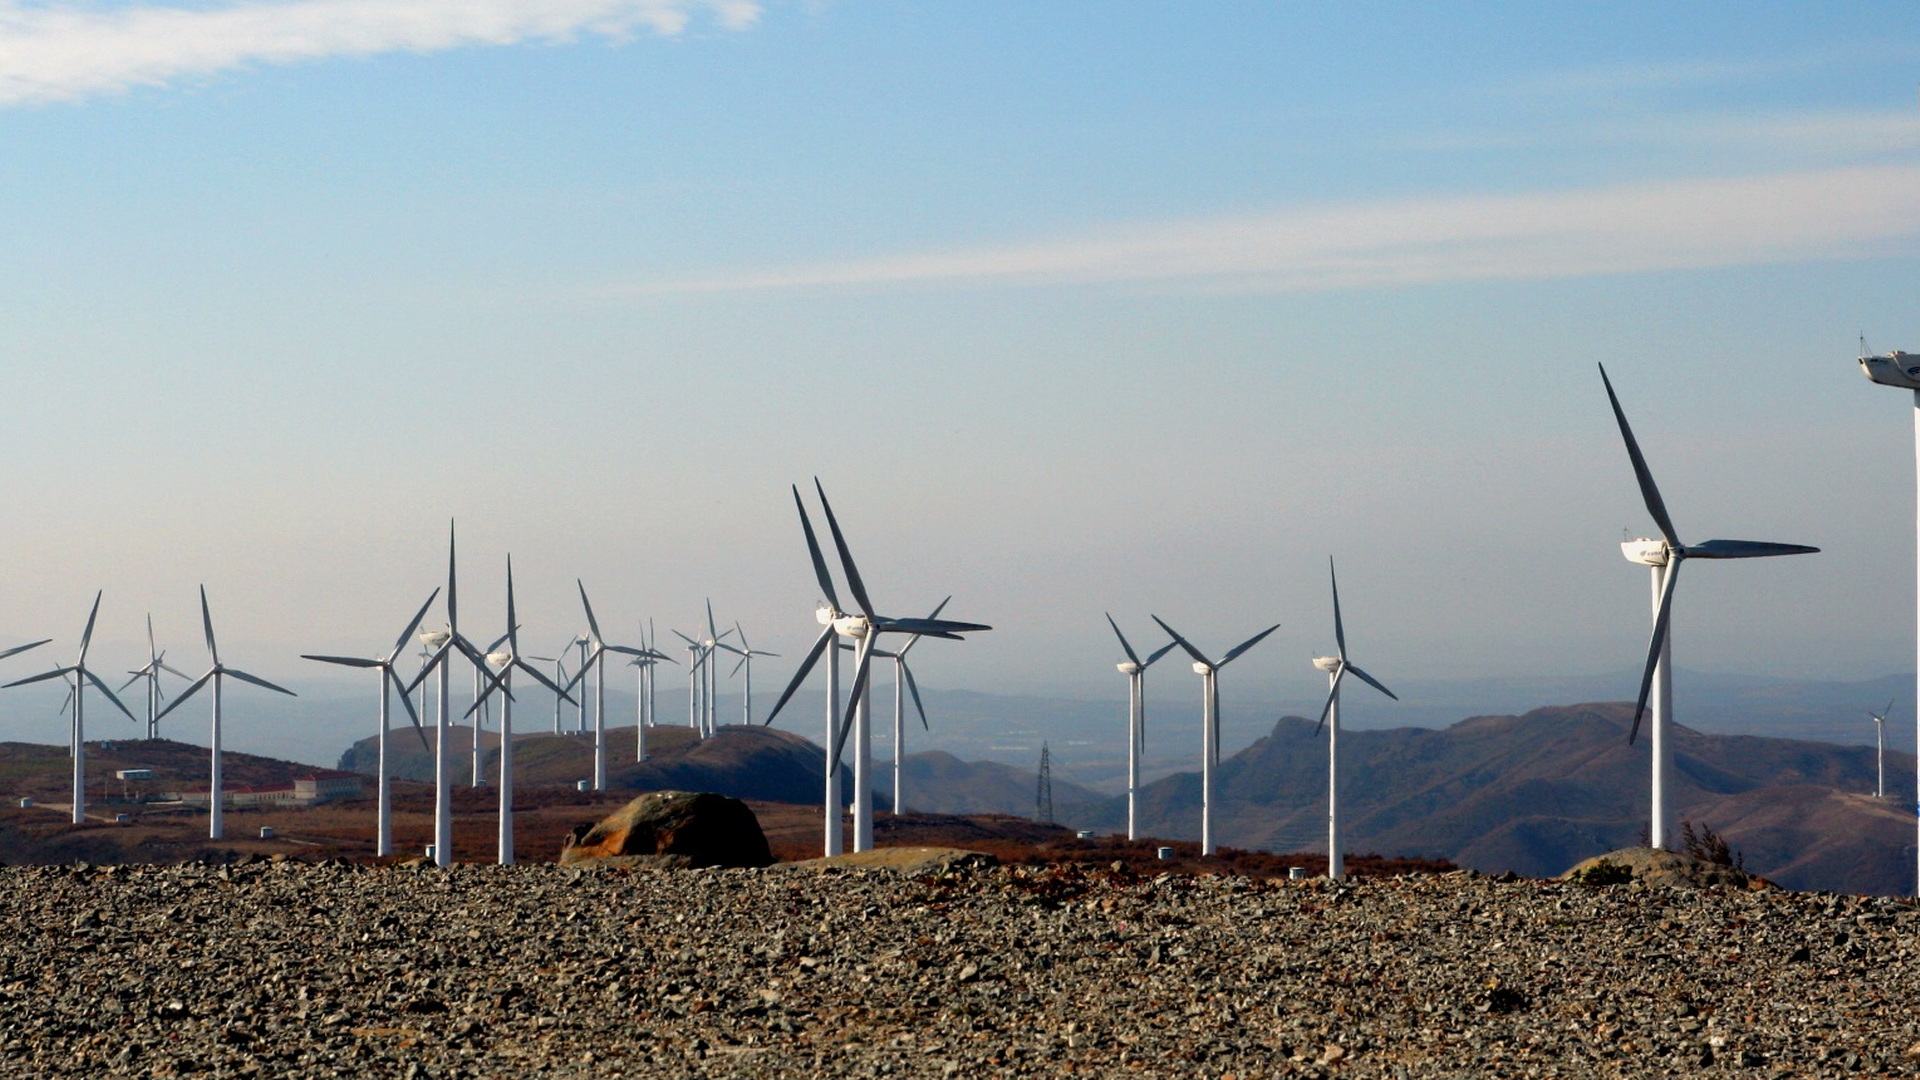 Mulan wind farm [CREDIT: Global Climate Budget 2018]